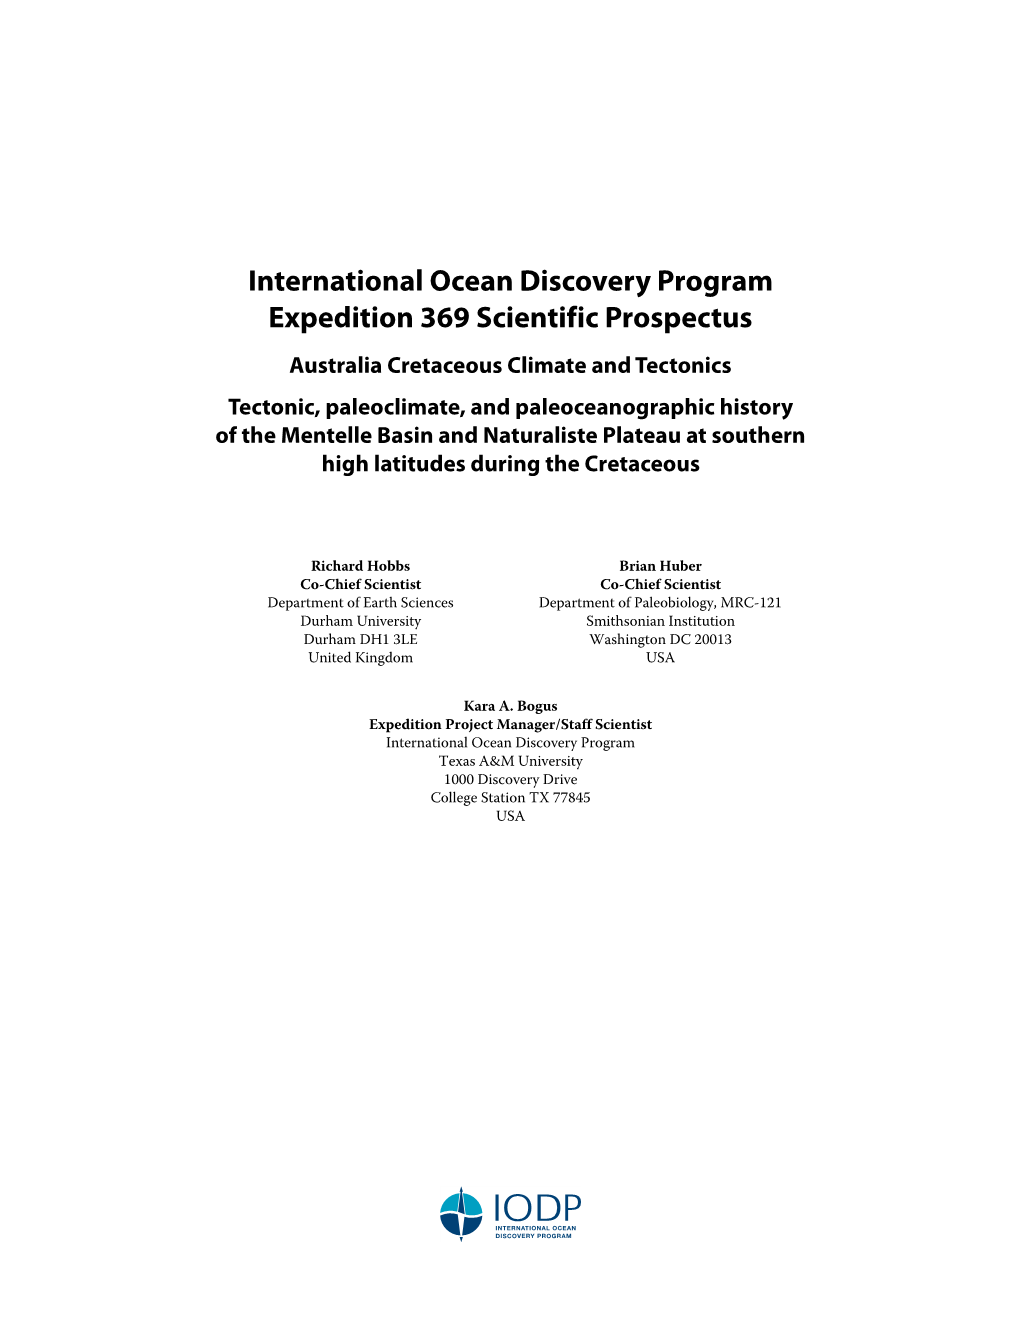 International Ocean Discovery Program Expedition 369 Scientific